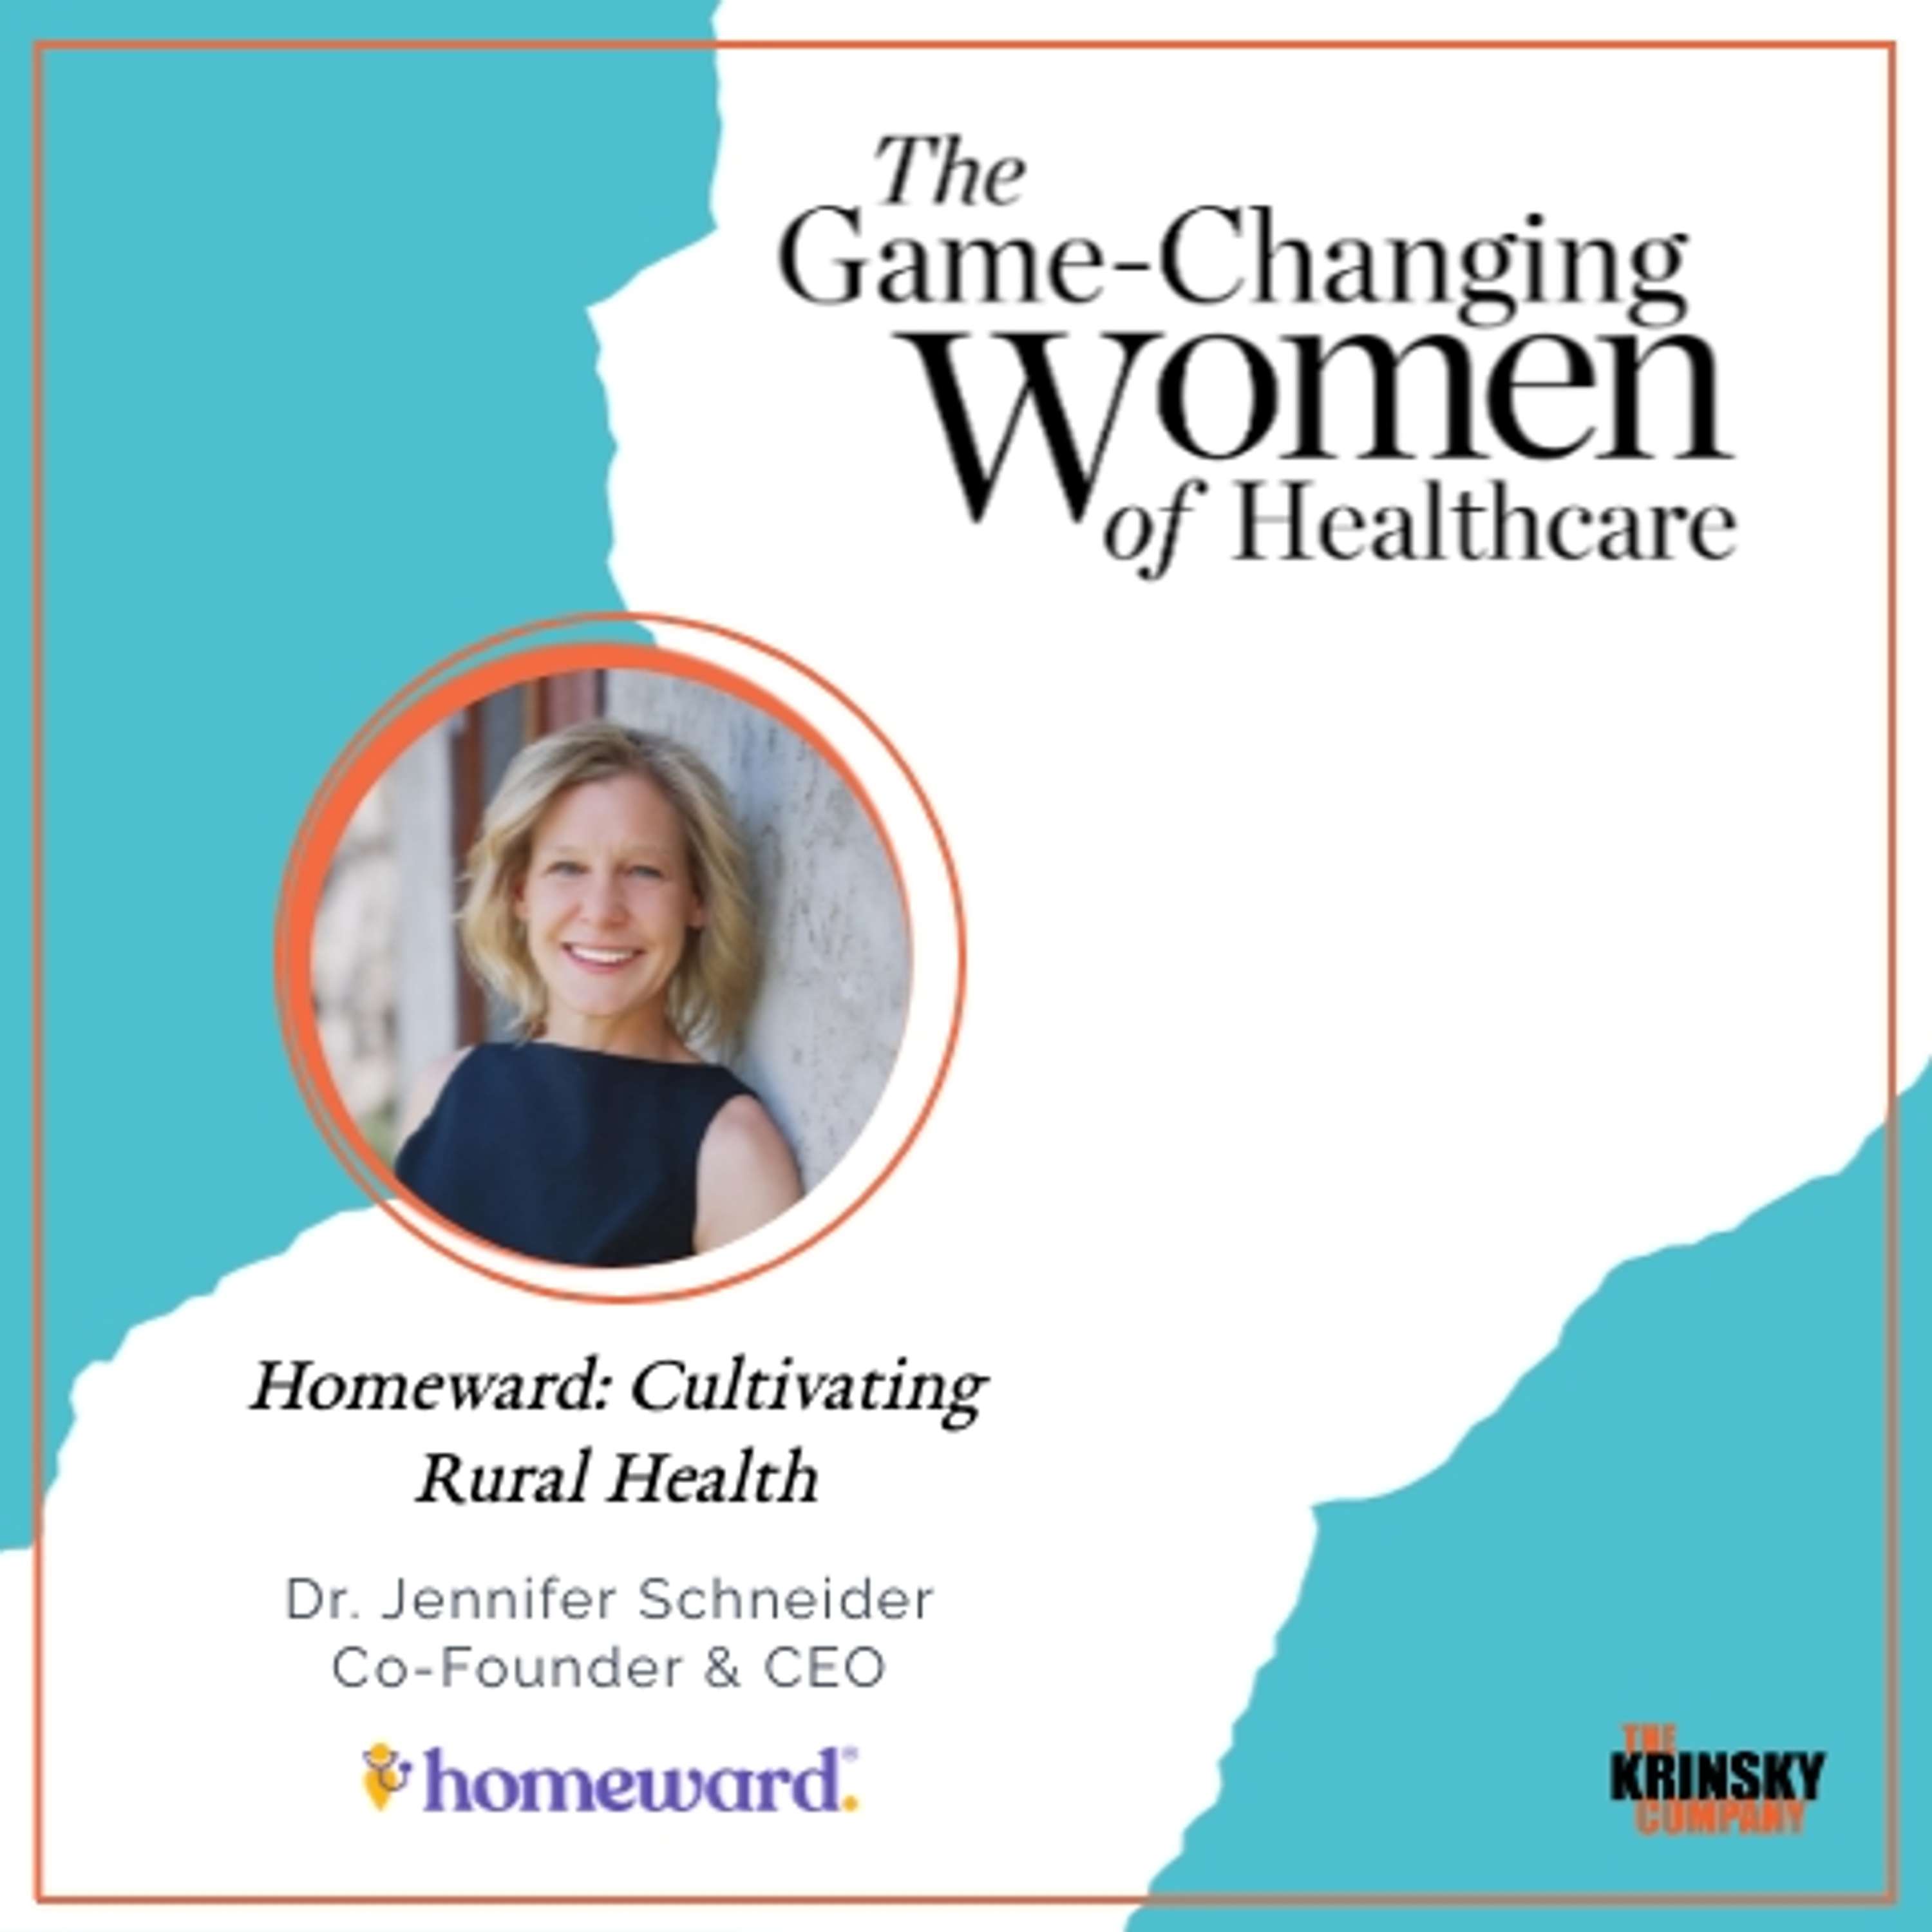 Homeward: Cultivating Rural Health